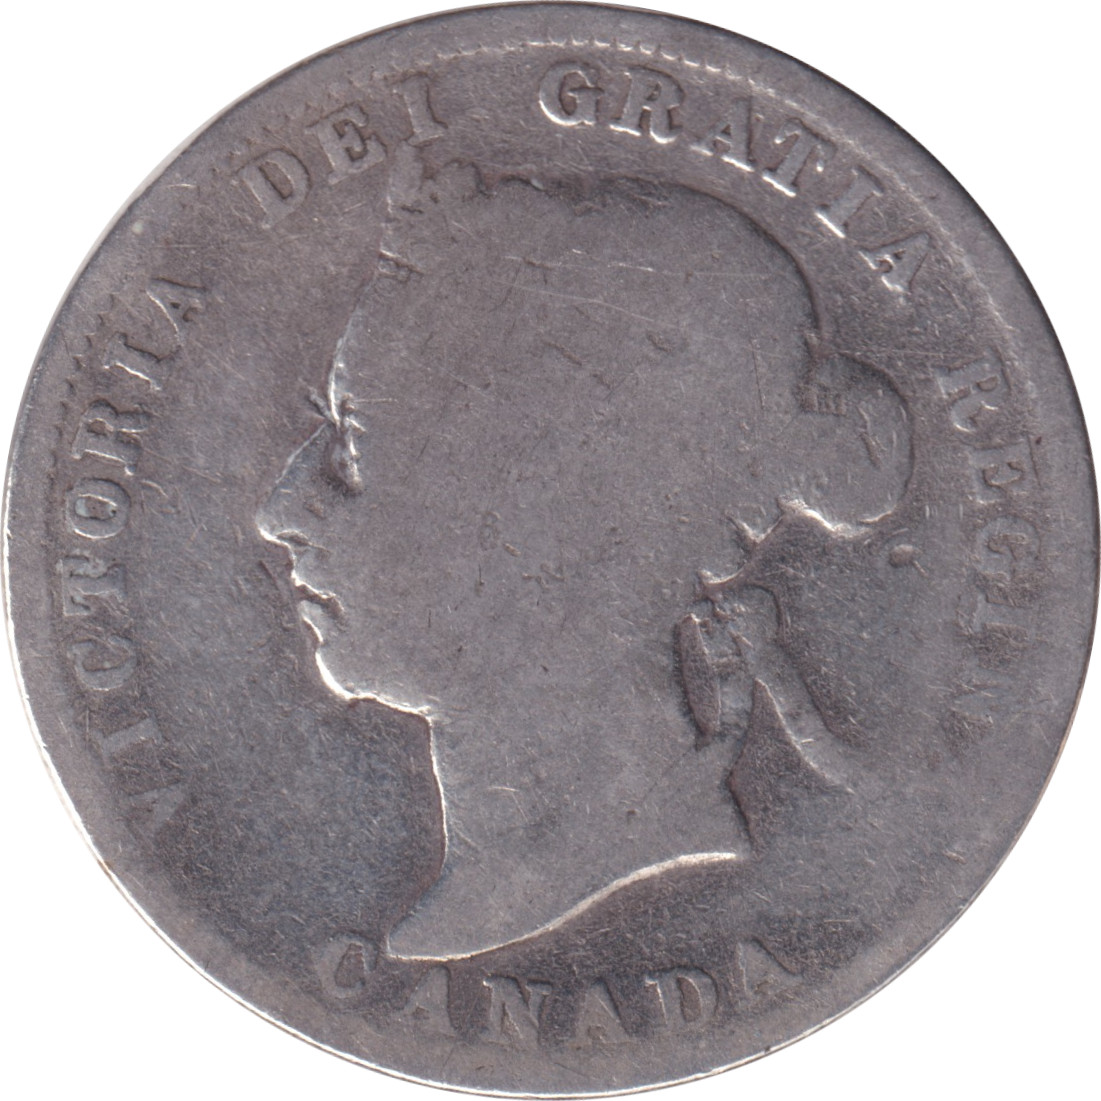 25 cents - Victoria